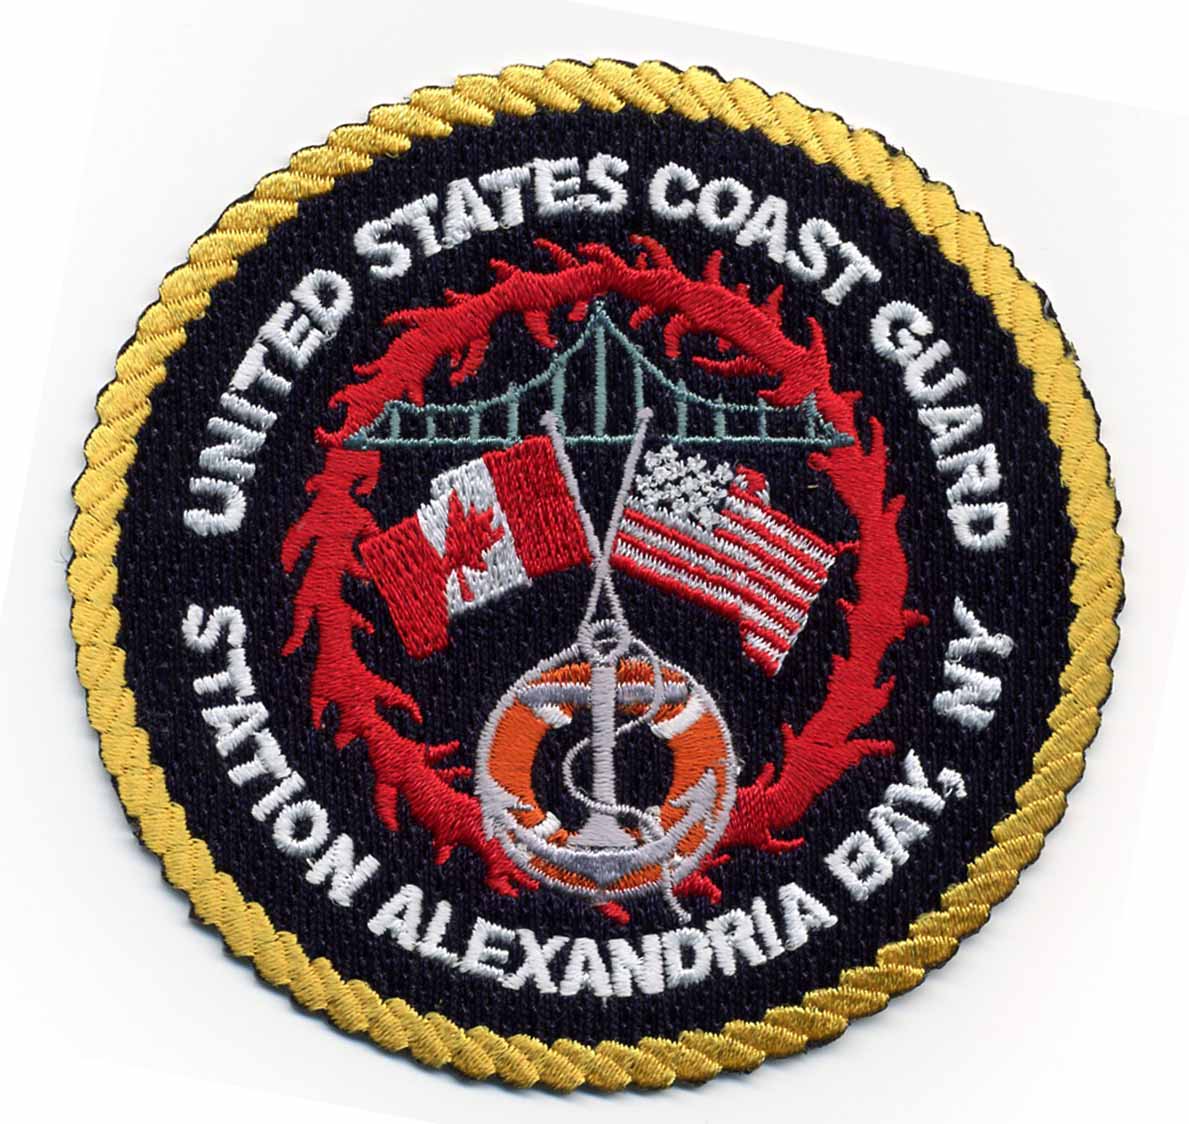 US Coast Guard Station Alexandria Bay